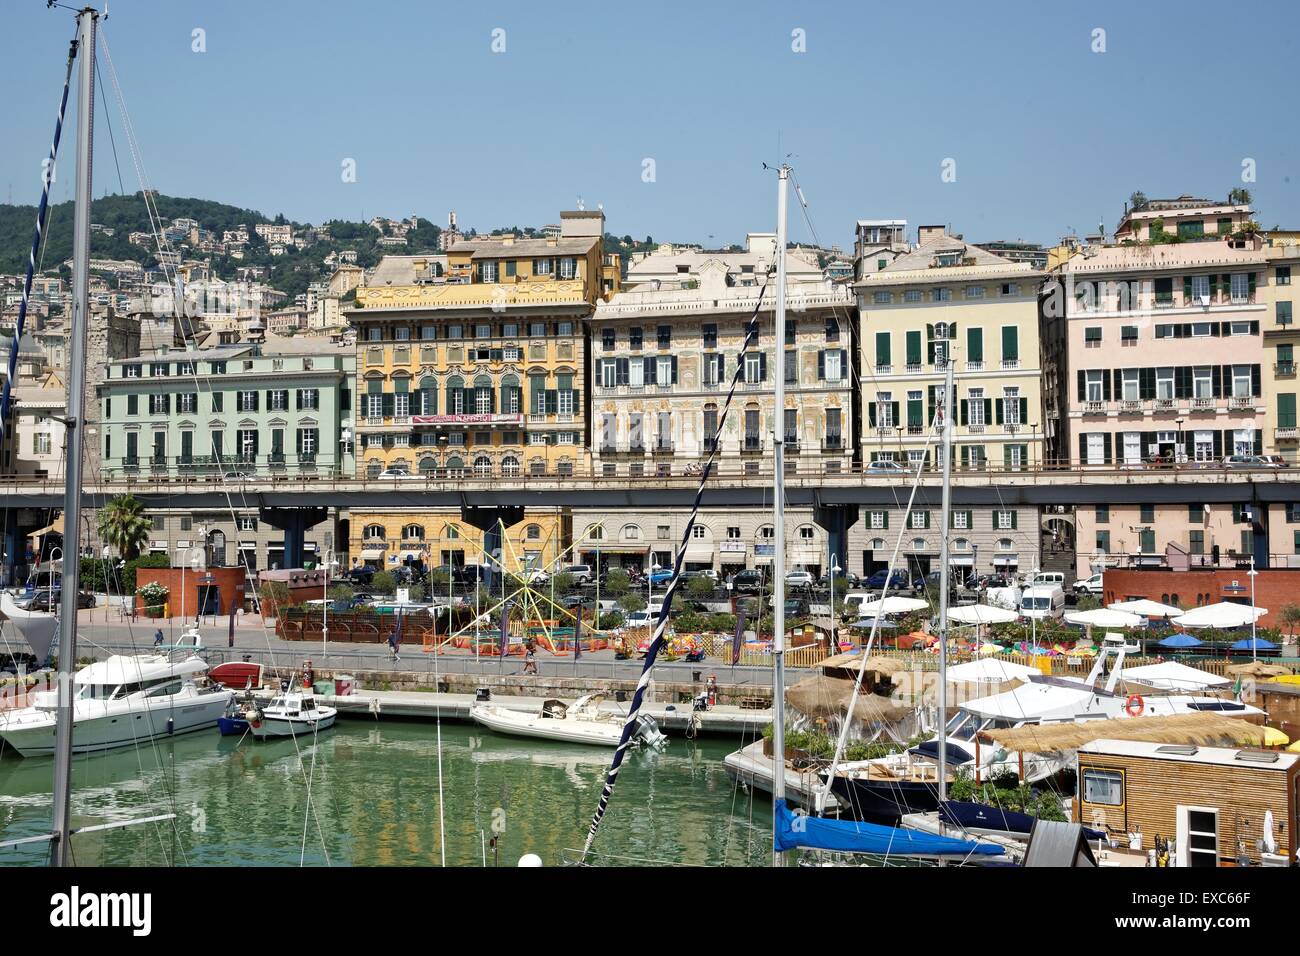 Porto Di Genova High Resolution Stock Photography and Images - Alamy